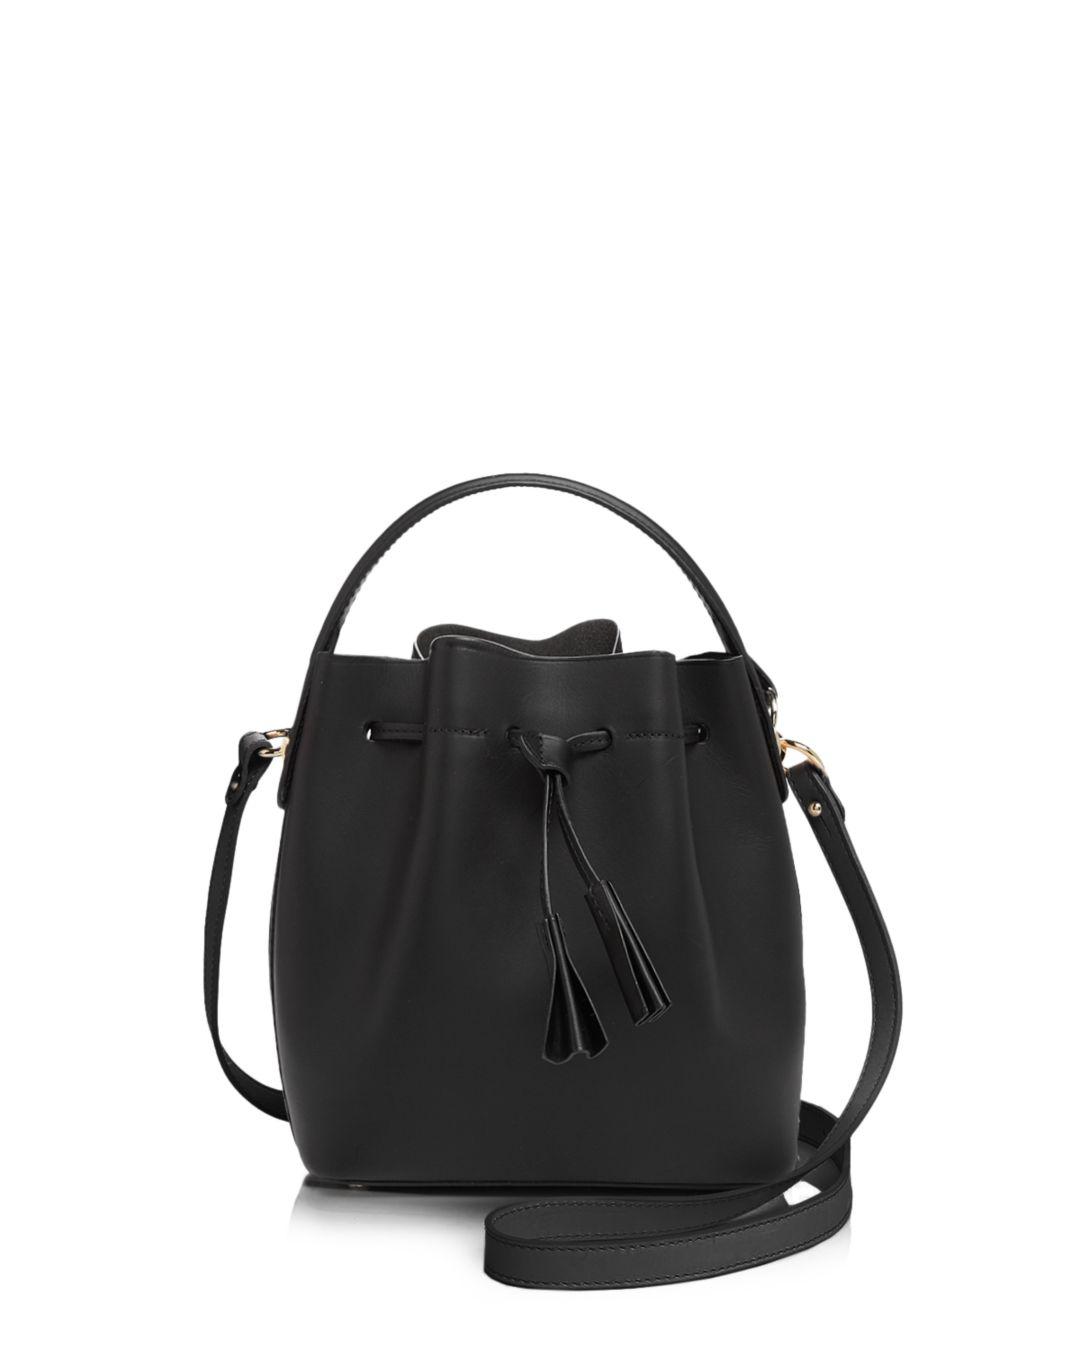 Celine Lefebure Karin Mini Leather Bucket Bag in Black - Lyst